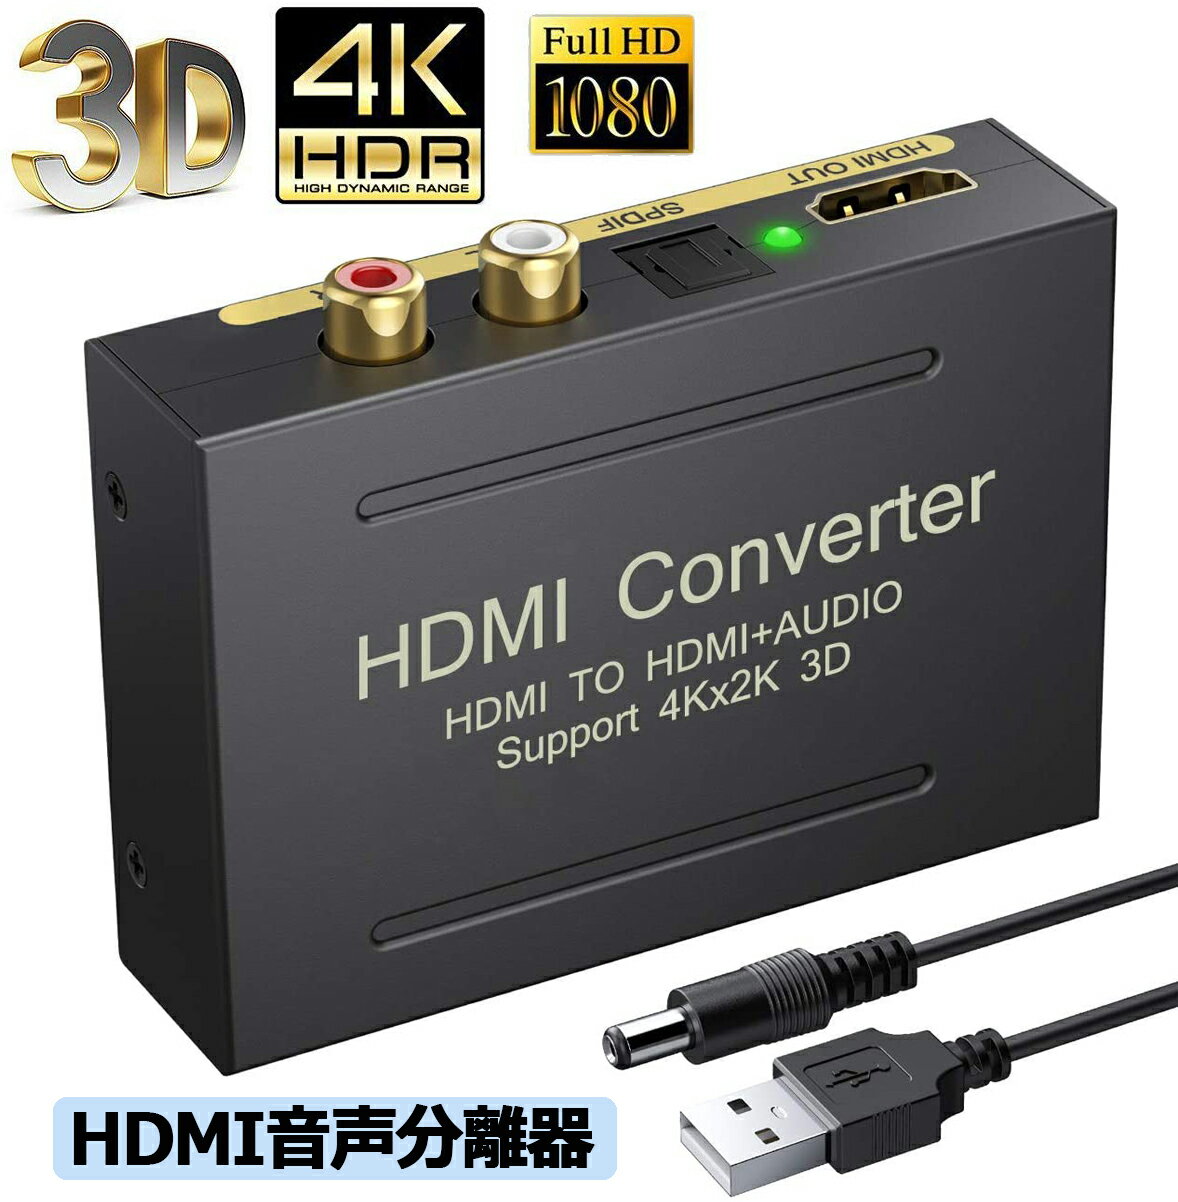 HDMI オーディオ 分離器 音声分離器 最大 4Kx2K 3D HDMI→HDMI Audio（SPDIF光デジタル RCAアナログ出力) 3種類 音声 分離モード PASS 2CH 5.1CH HDMI出力 ステレオ サラウンド サウンド コンバータ